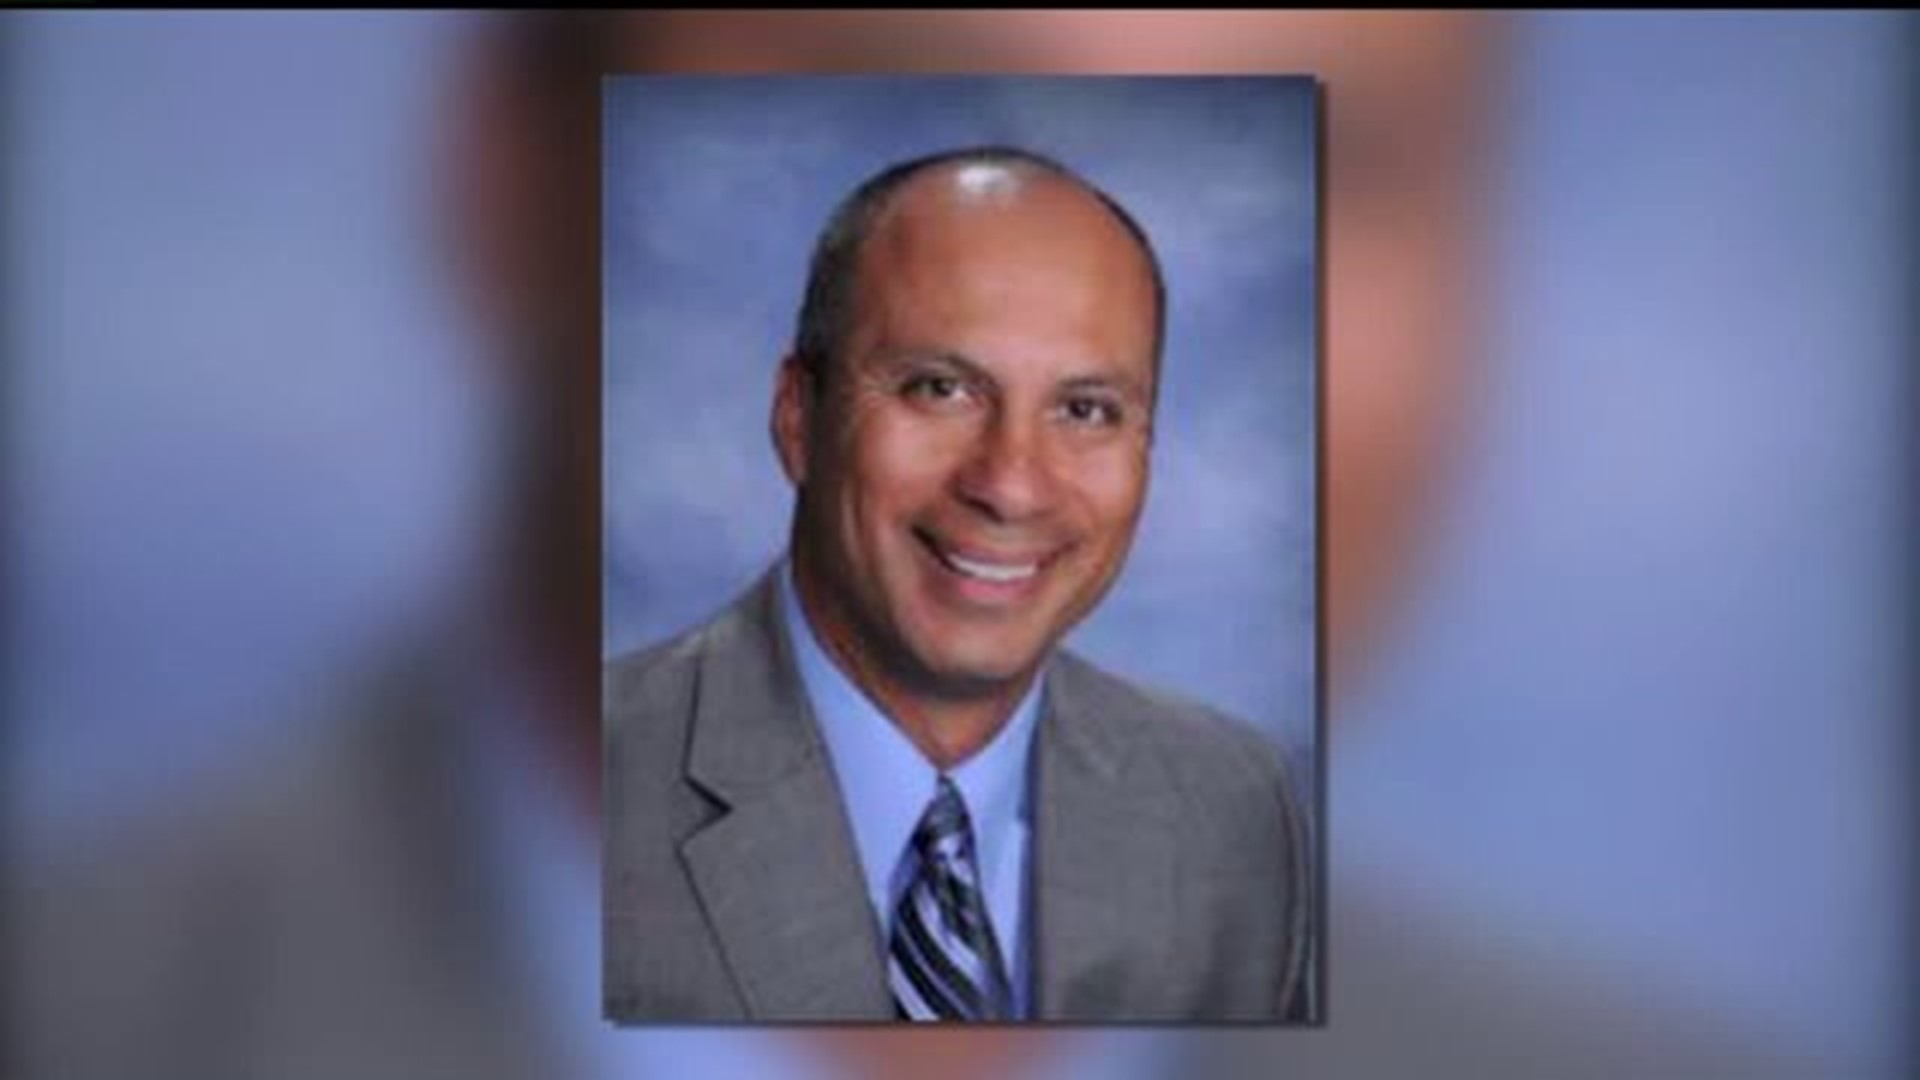 Bettendorf High School Principal Resigns